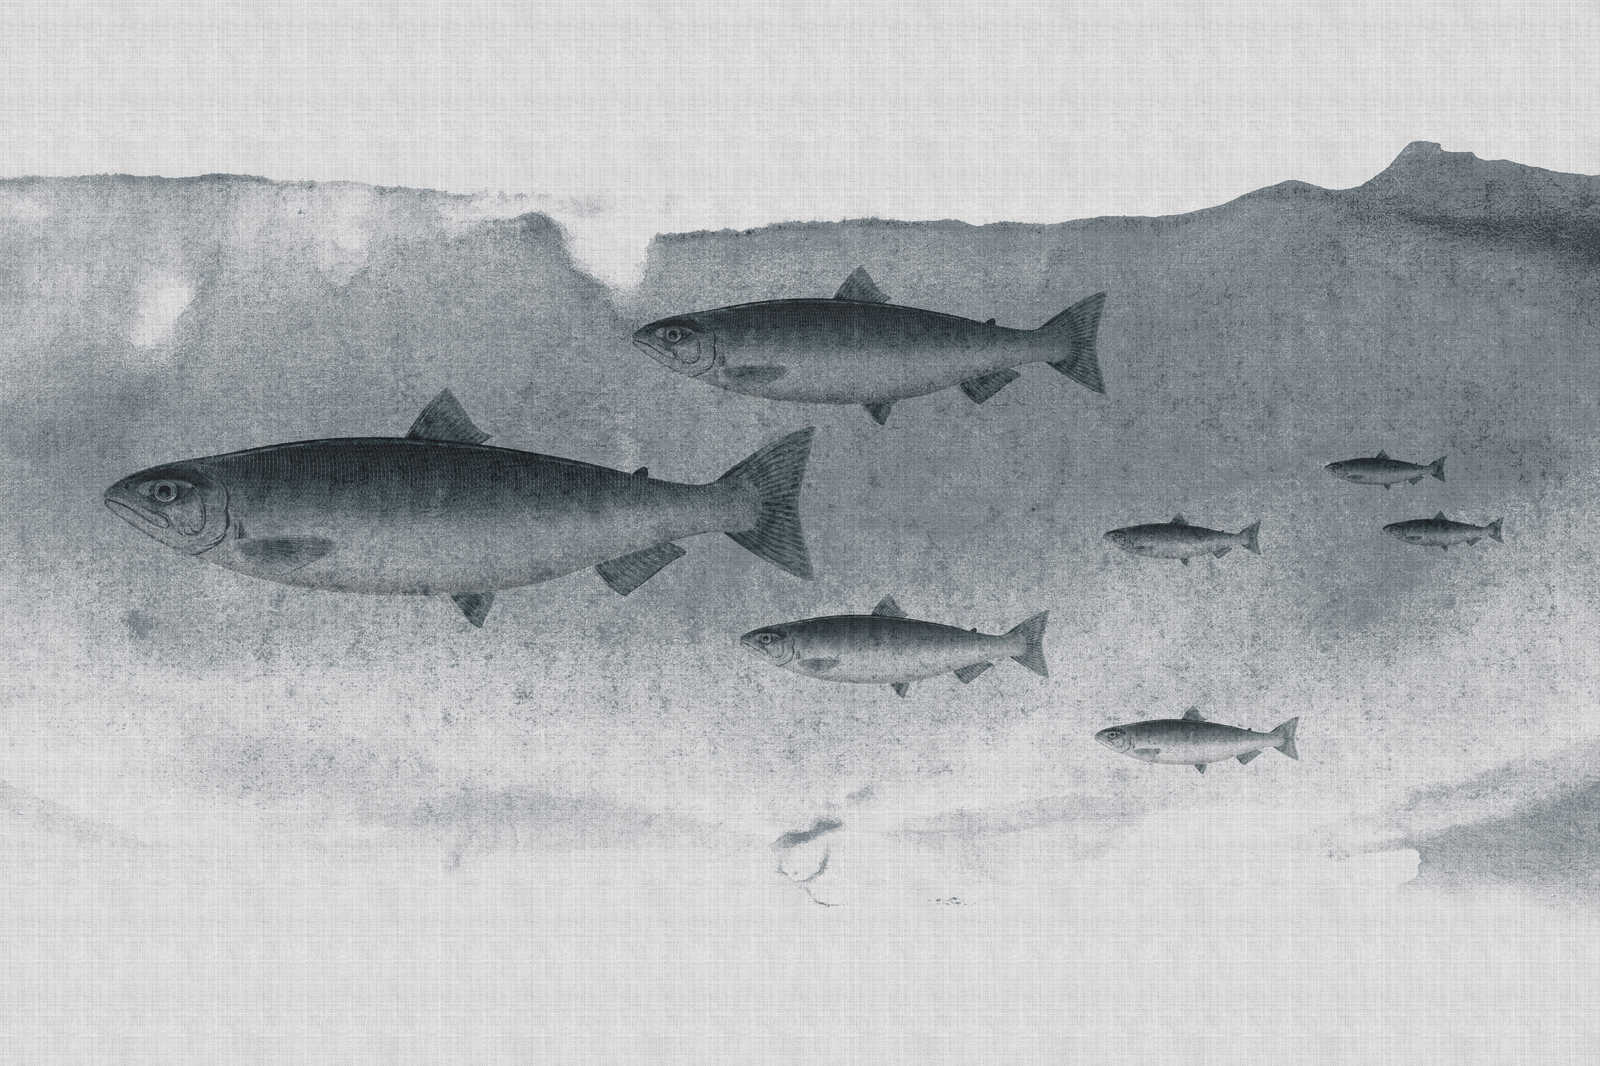             Into the blue 3 - Acuarela de peces en gris como cuadro en lienzo con estructura de lino natural - 0,90 m x 0,60 m
        